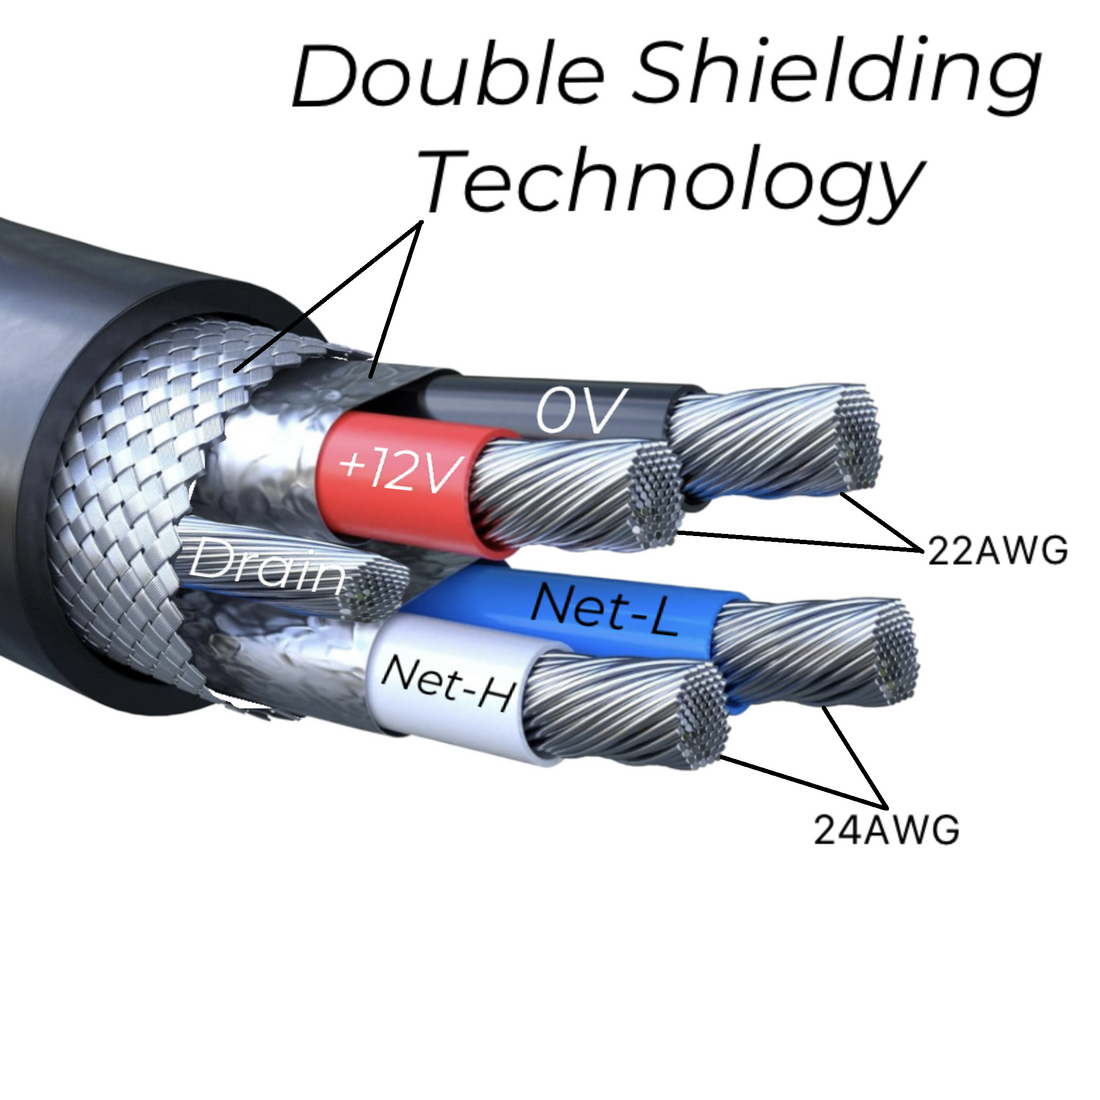 NMEA 2000 cable technology